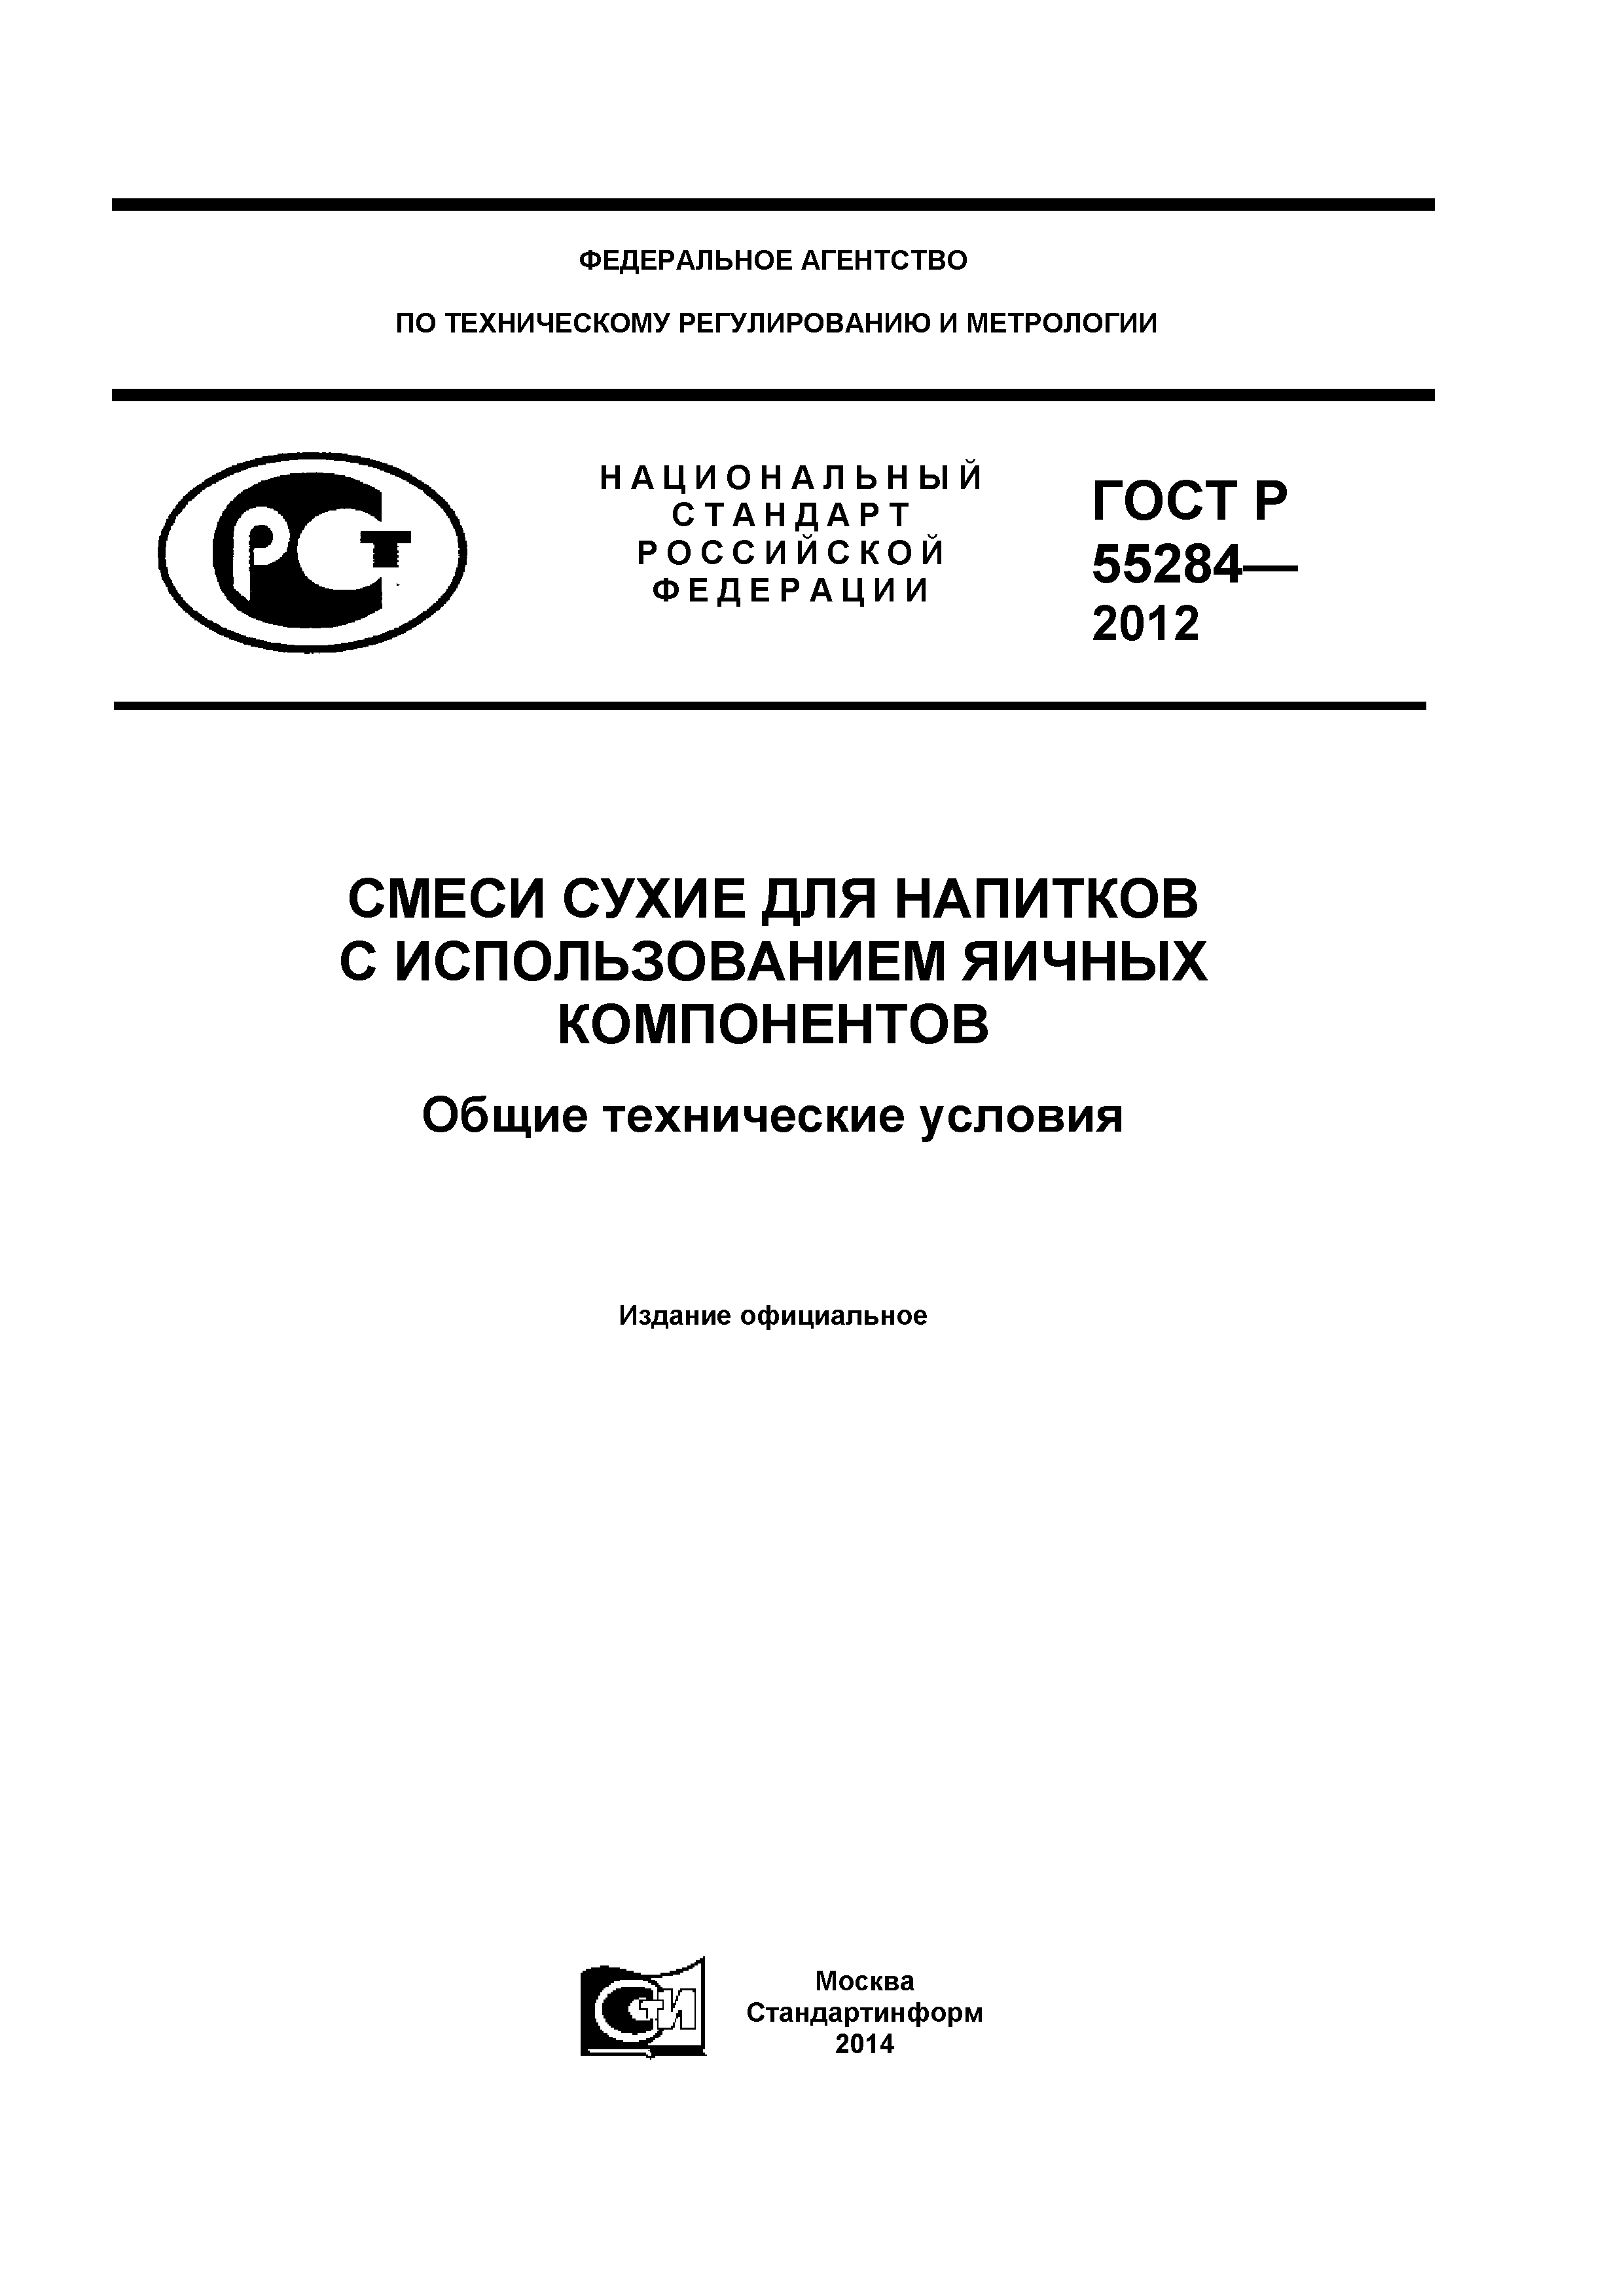 ГОСТ Р 55284-2012